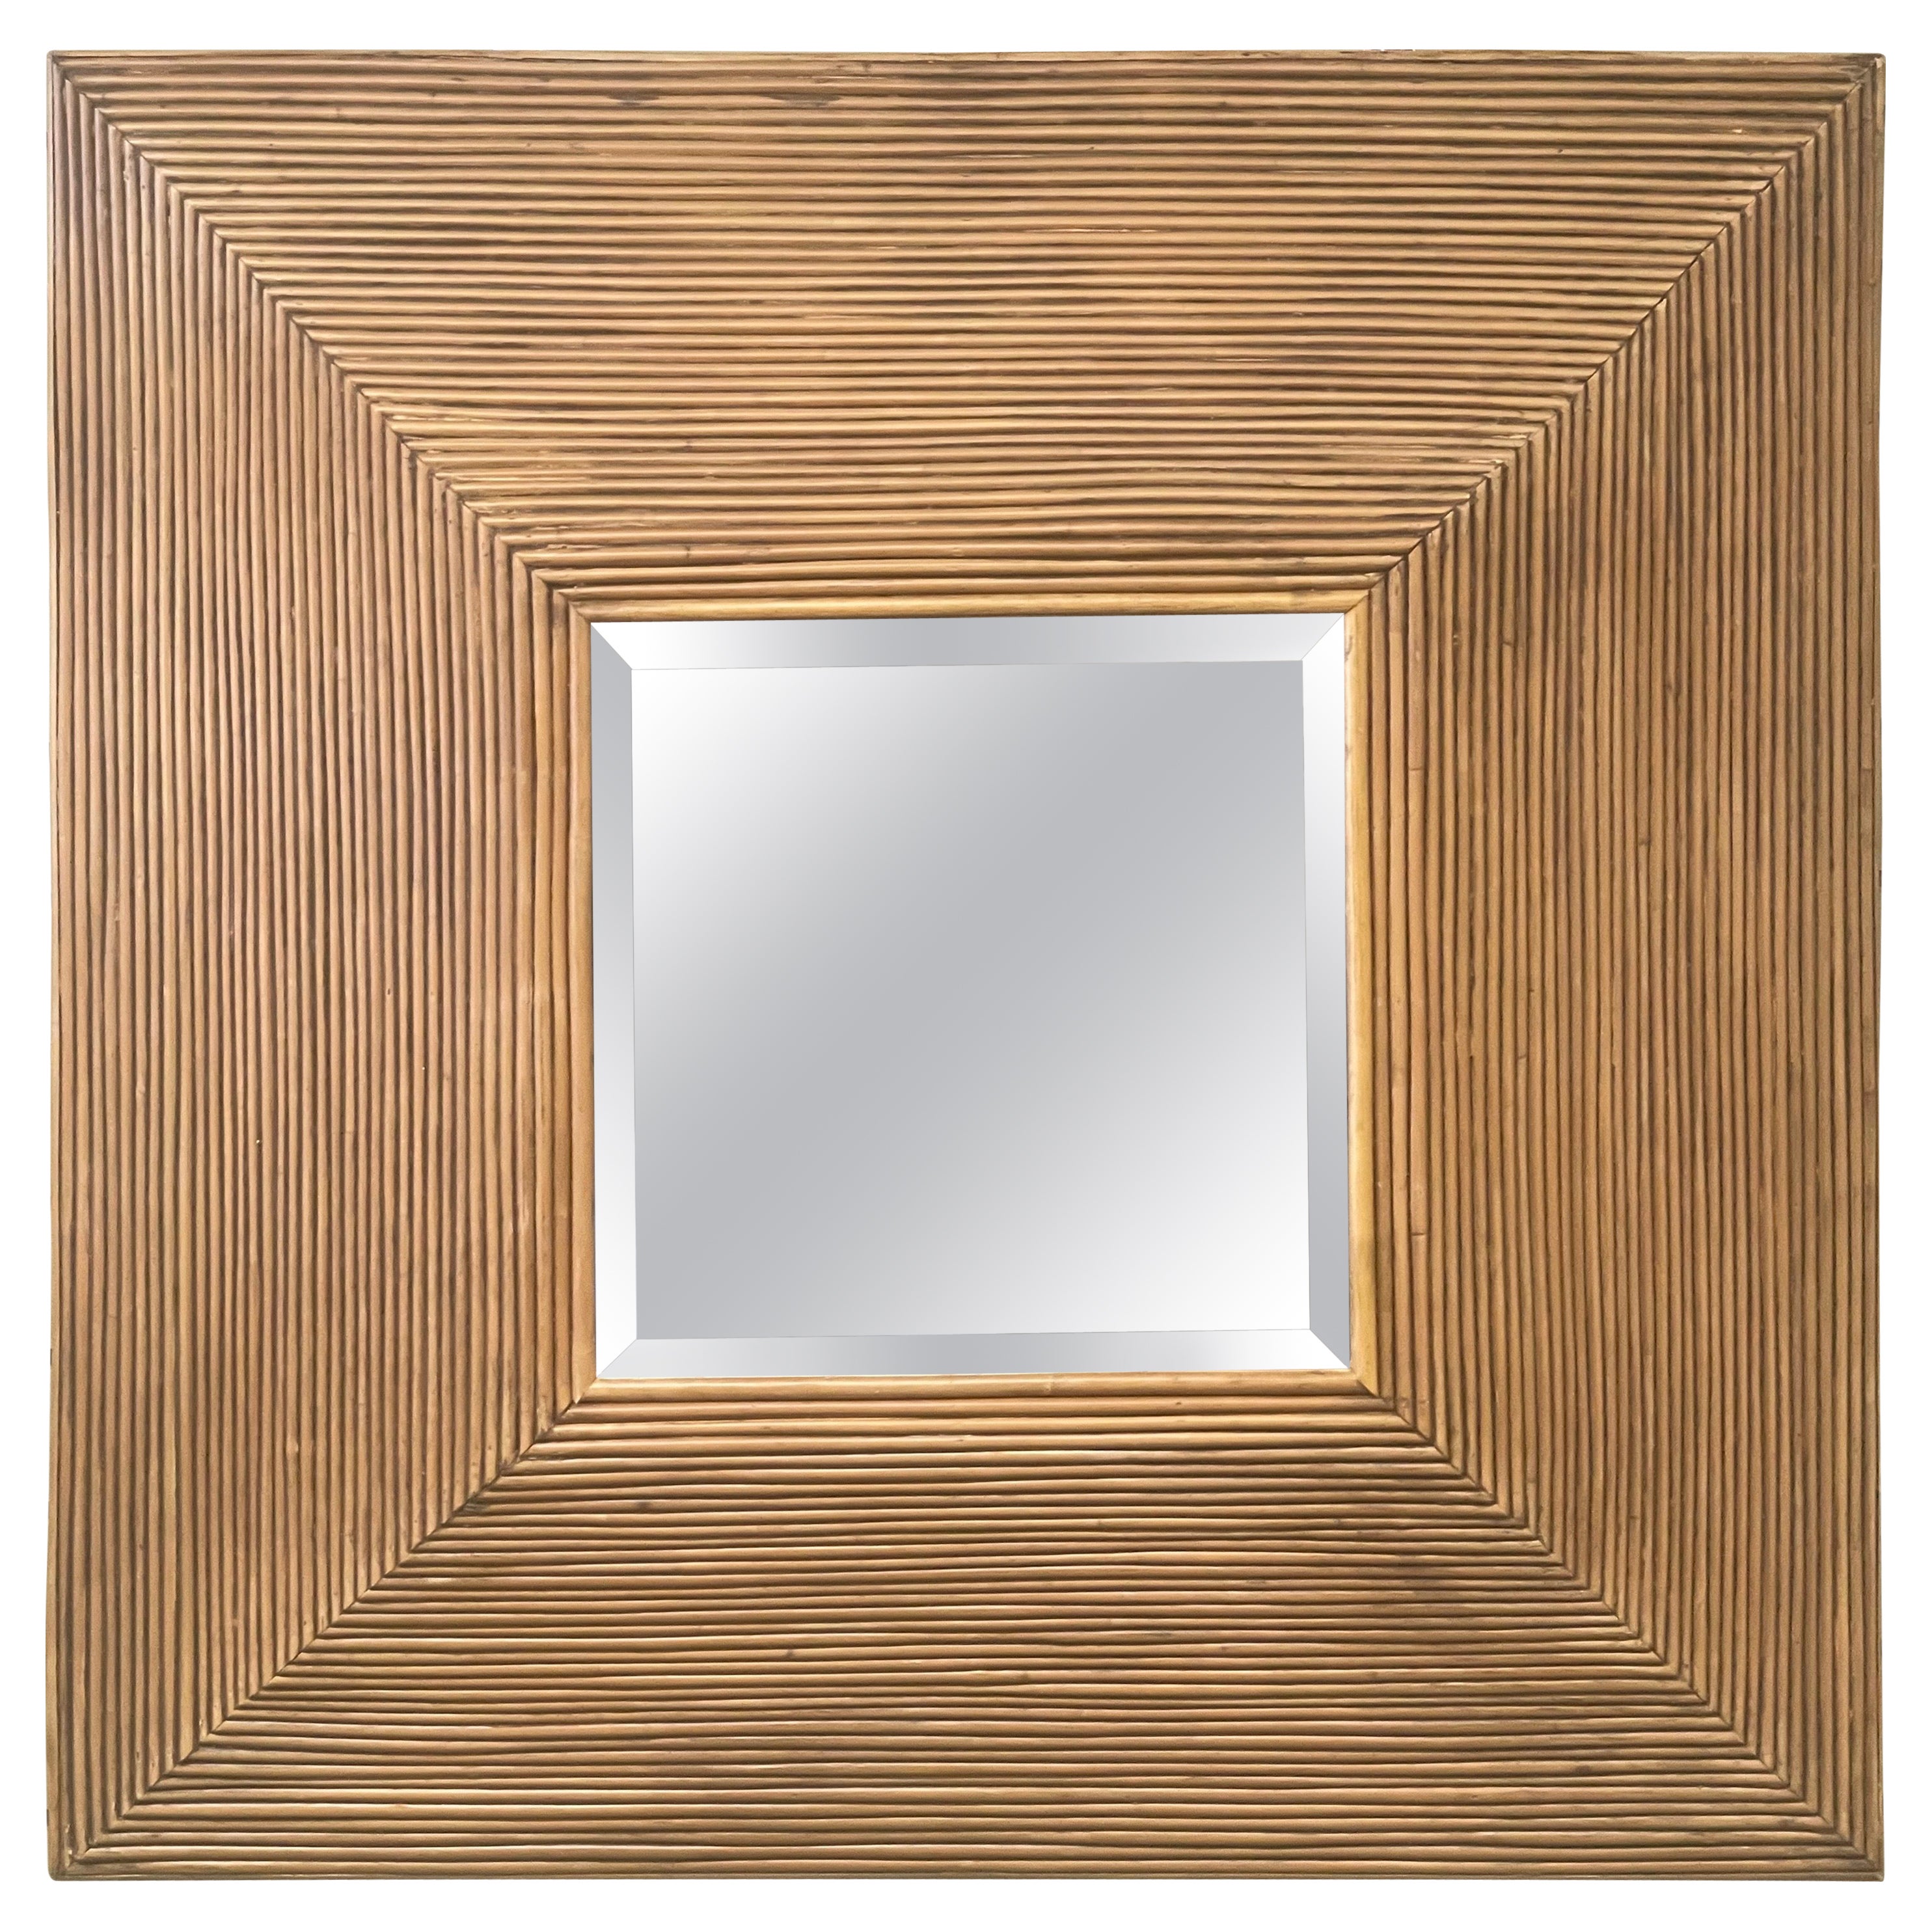 Square Rattan / Bamboo Elevated Mirror